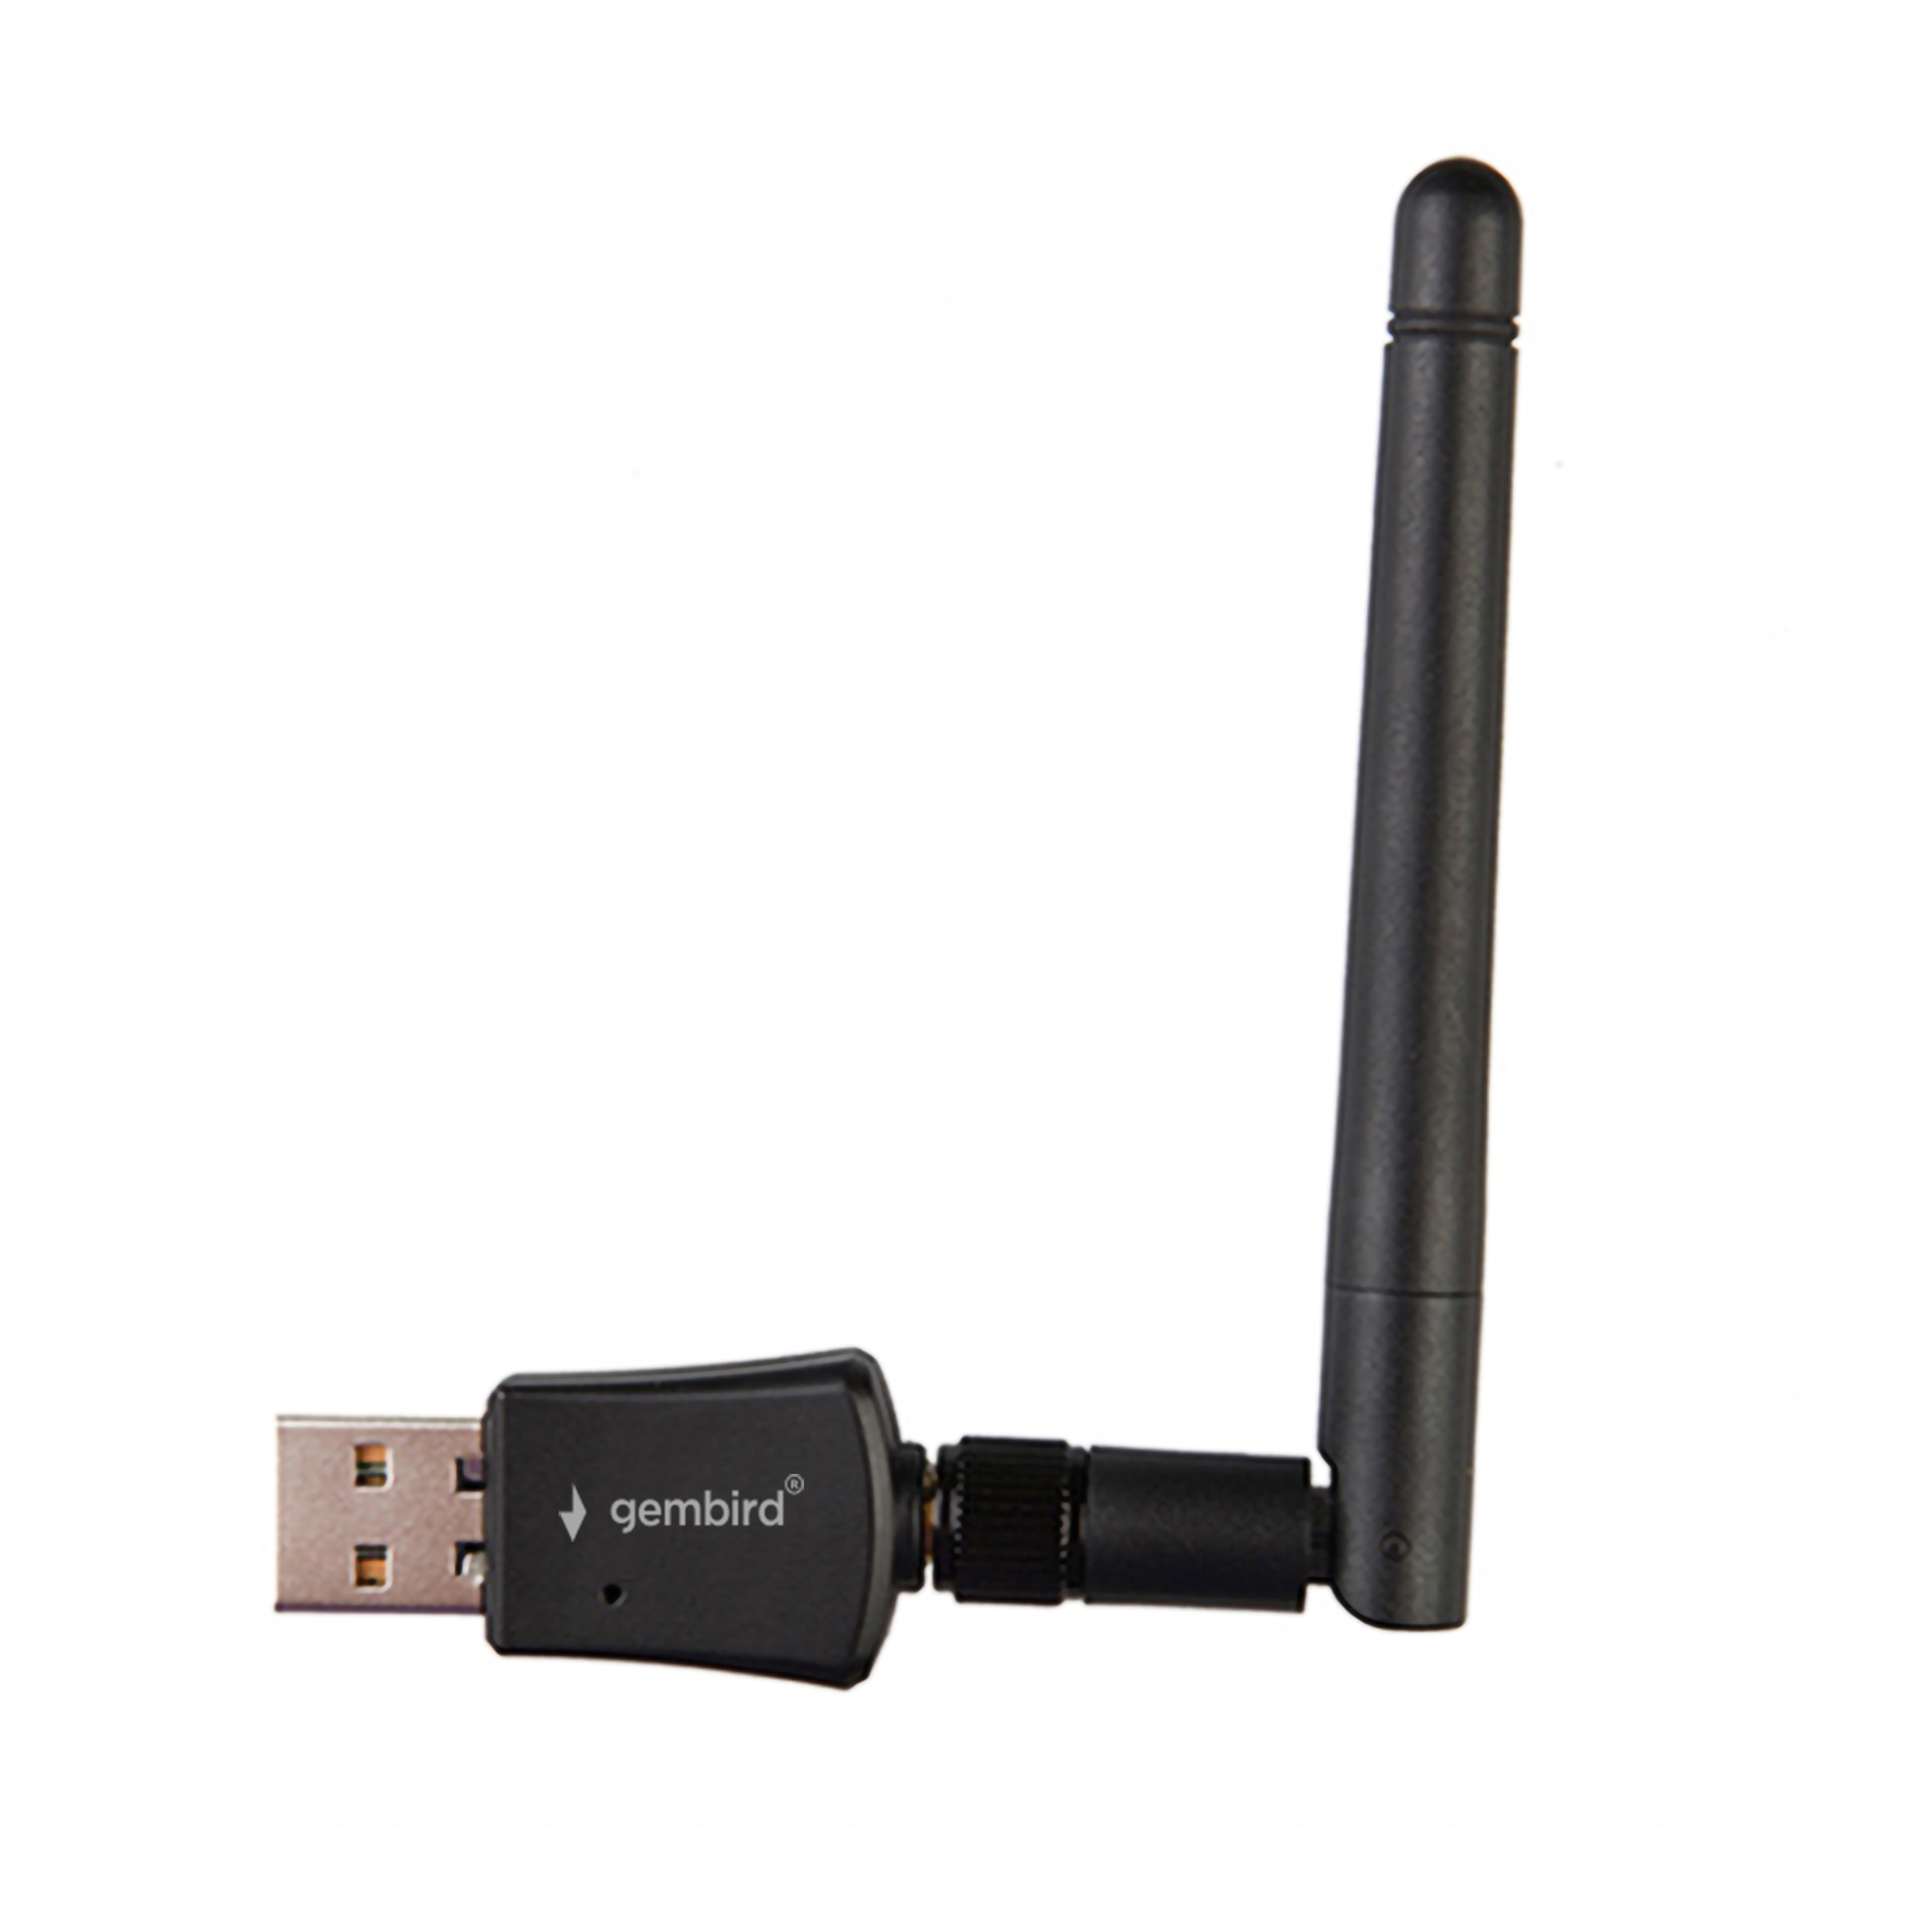 Derive Mary Beliggenhed High power USB WiFi adapter, 300 Mbps | Elektronik Lavpris Aps